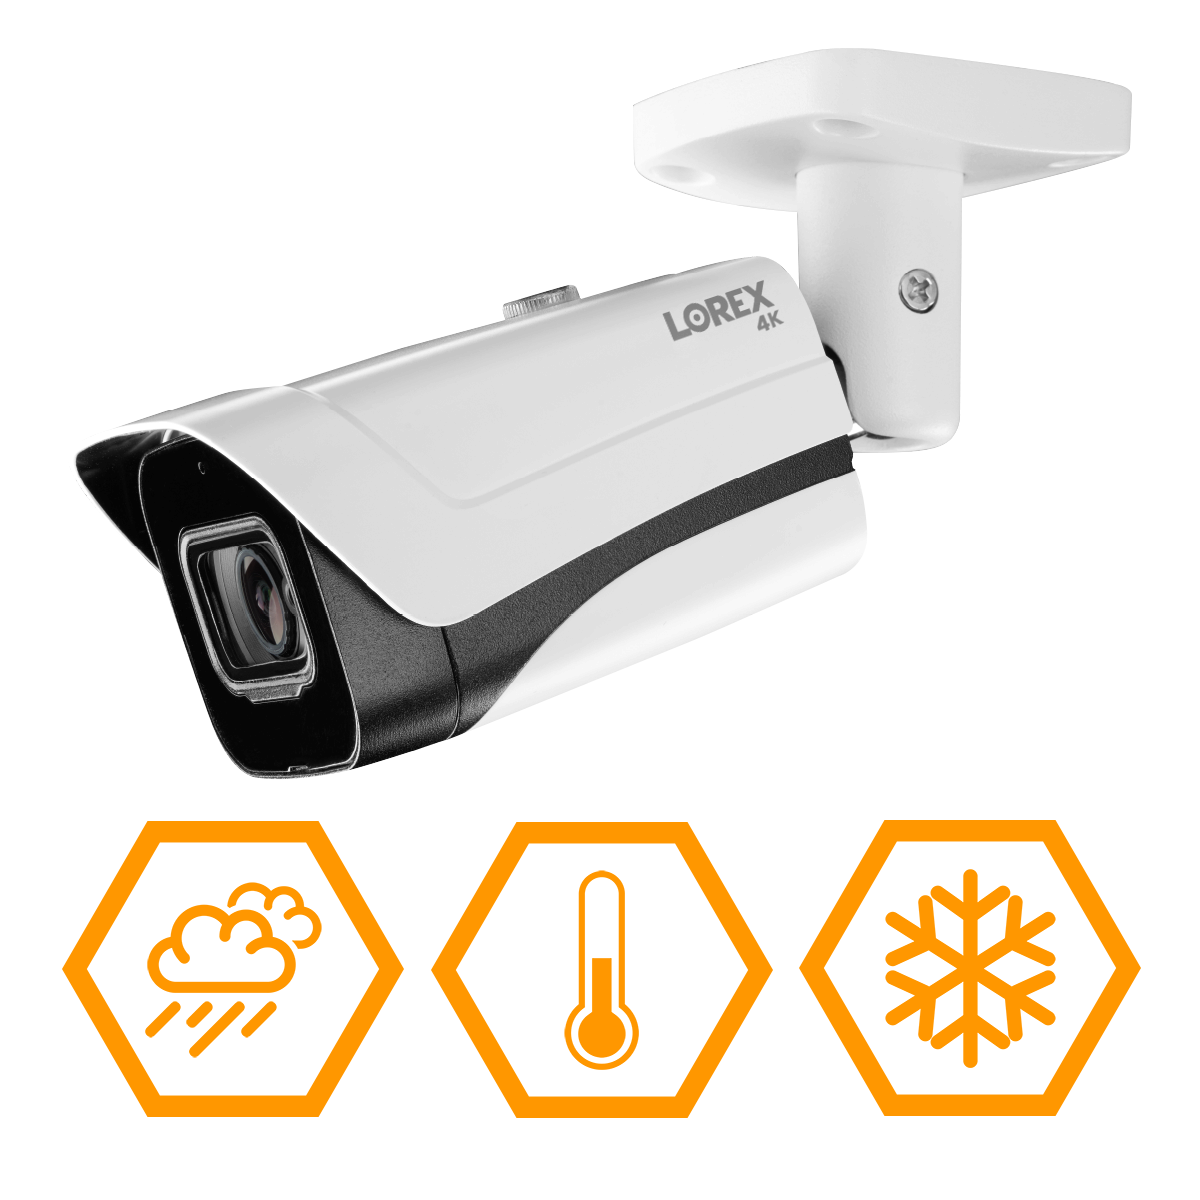 IP67 security camera